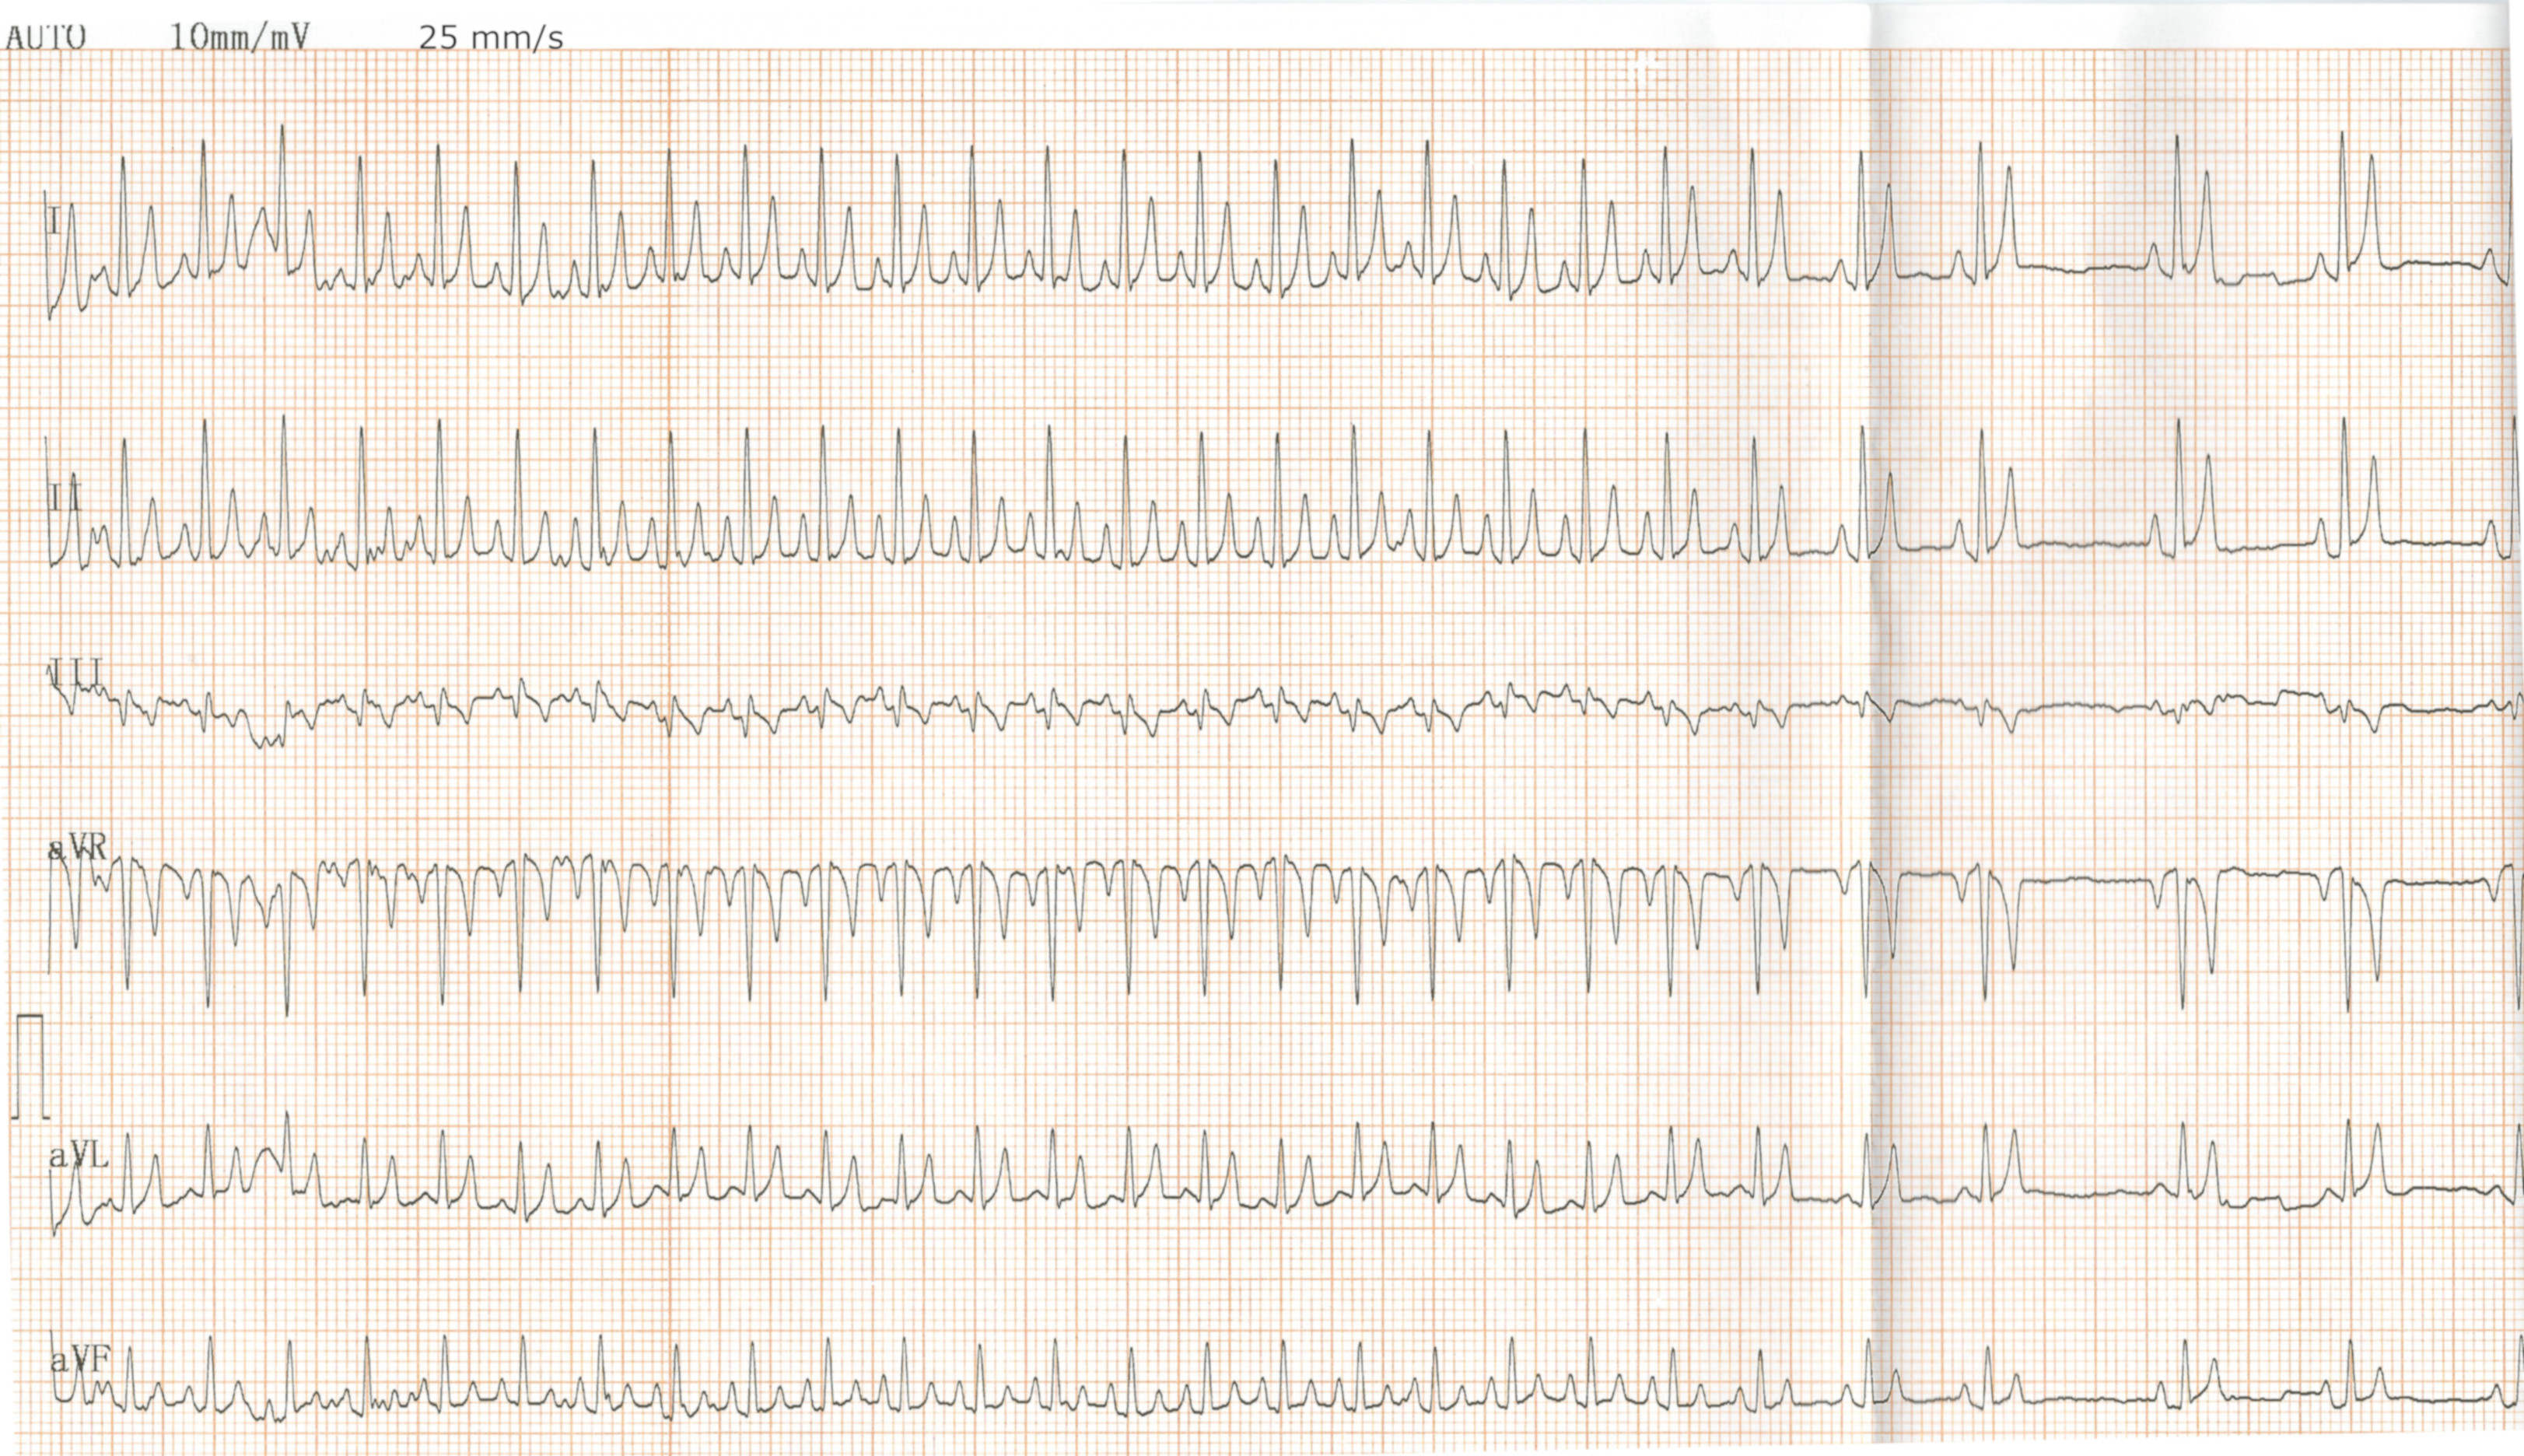 Tachycardie atriale ectopique (tachycardie atriale focale avec conduction AV 1:1